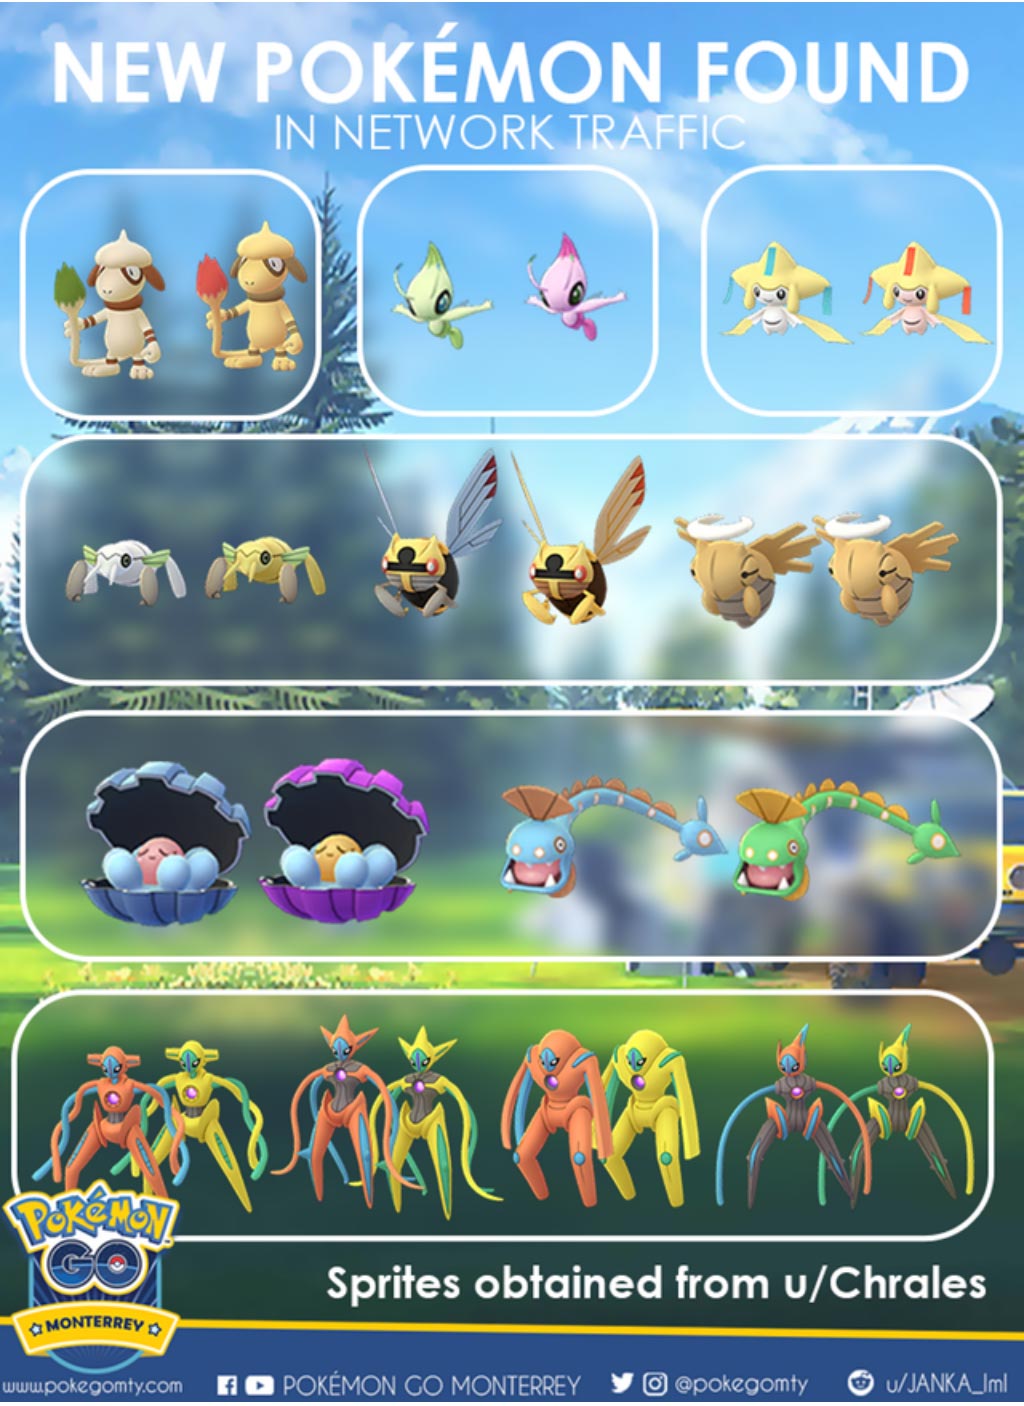 Pokémon Go Celebi quest walkthrough - Polygon